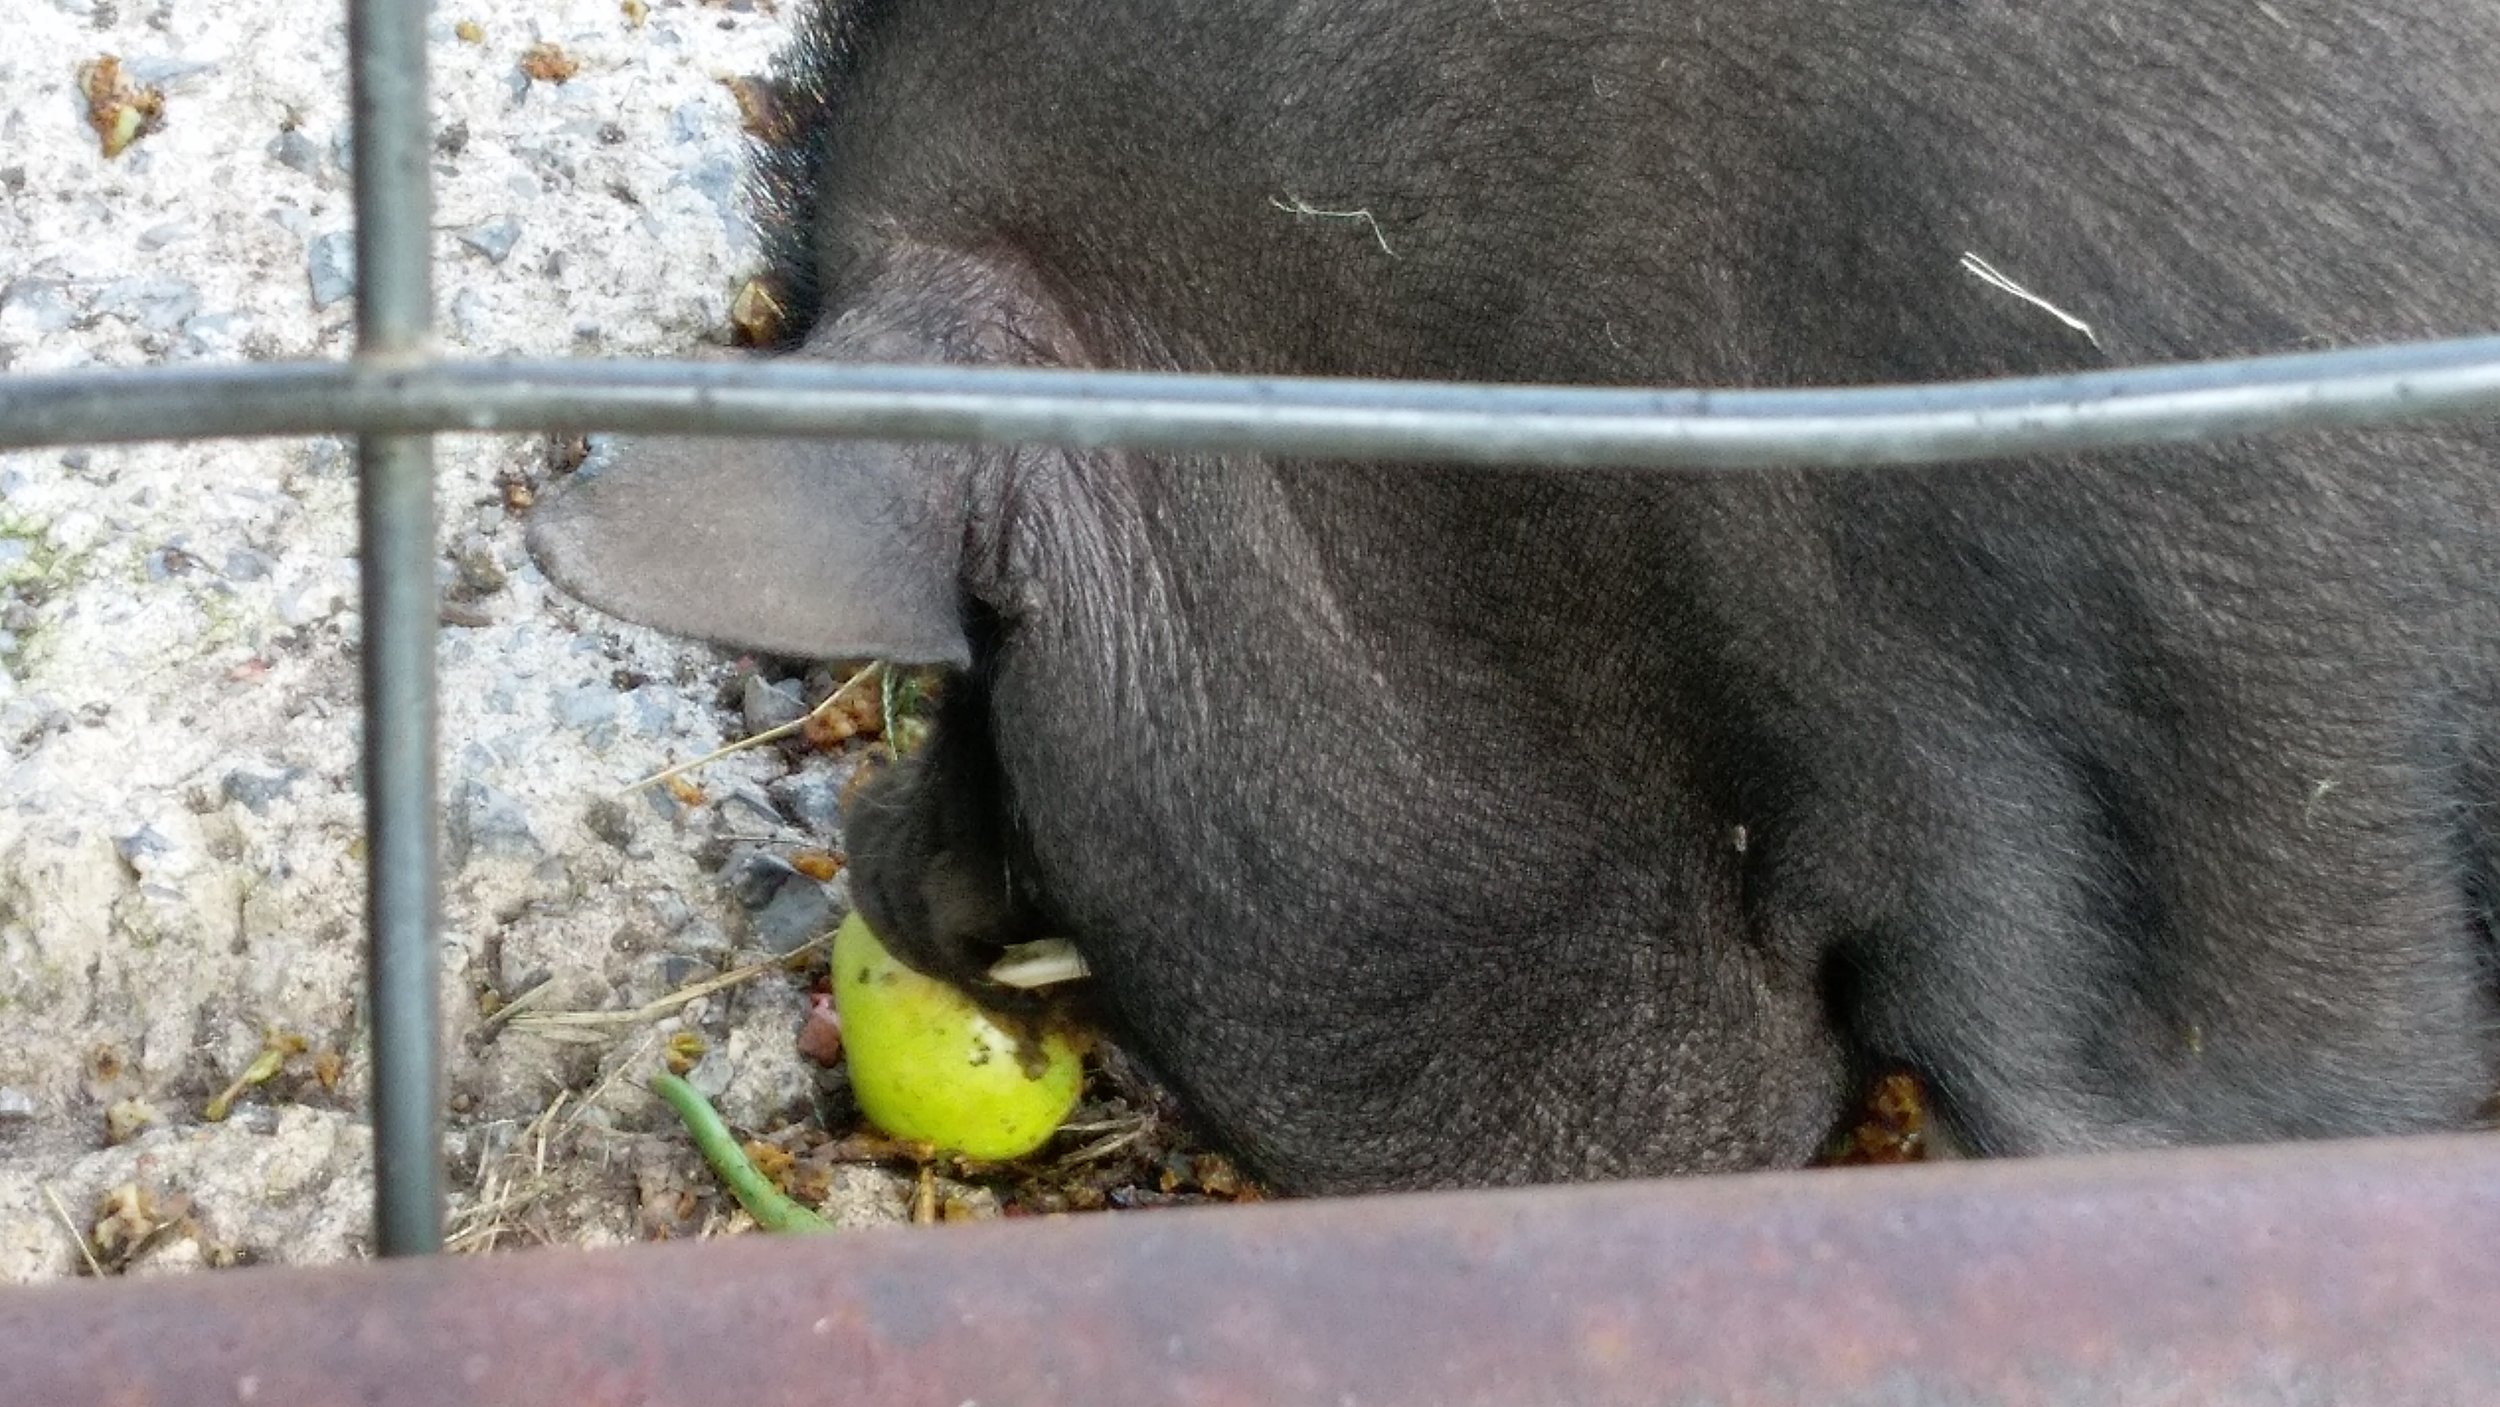 Pigs eating apples